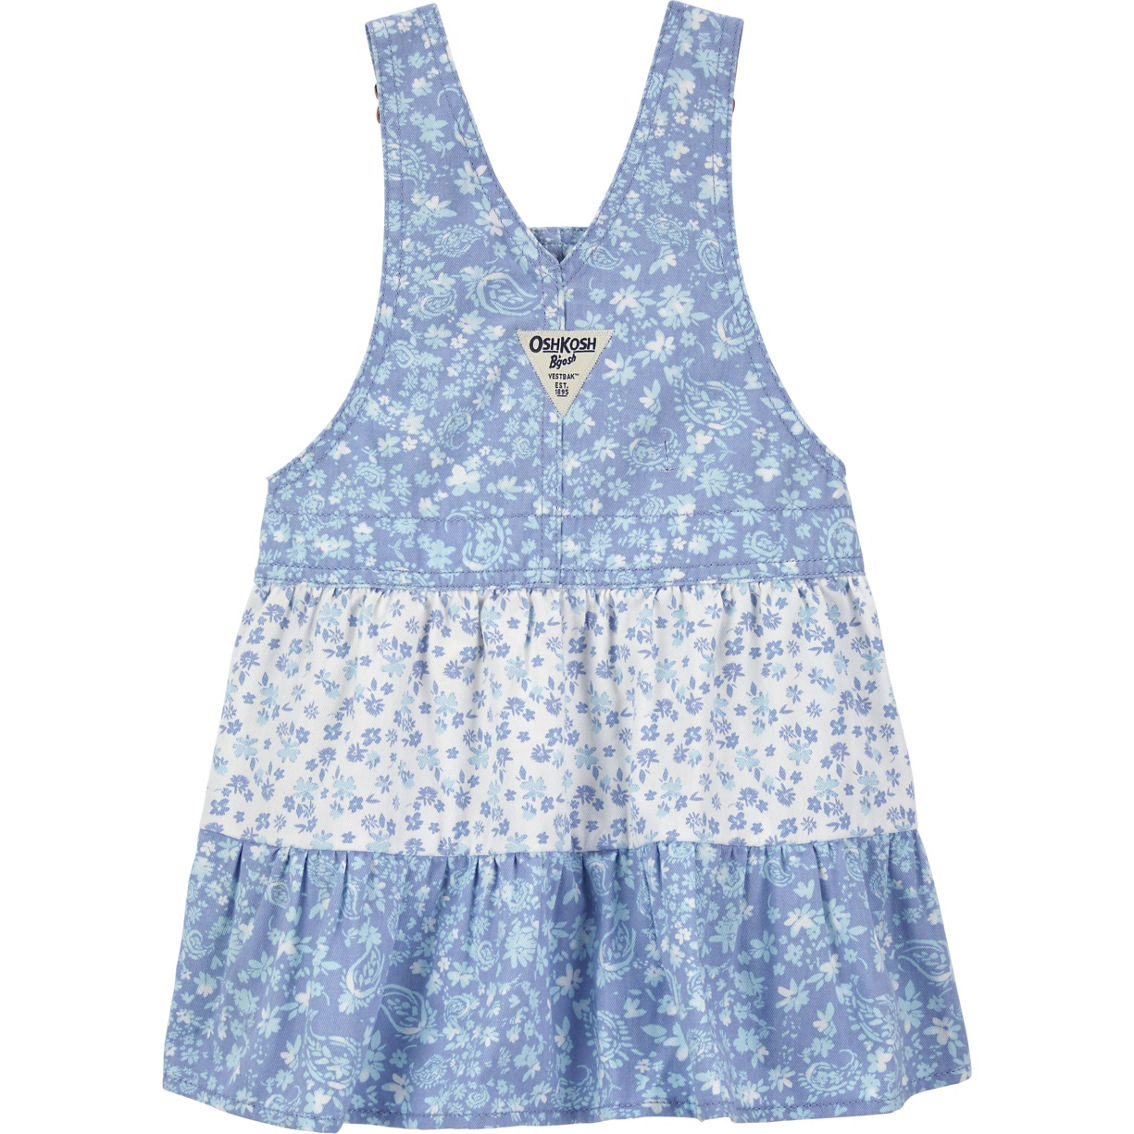 OshKosh B'gosh Toddler Girls Floral Print Tiered Jumper Dress - Image 2 of 3